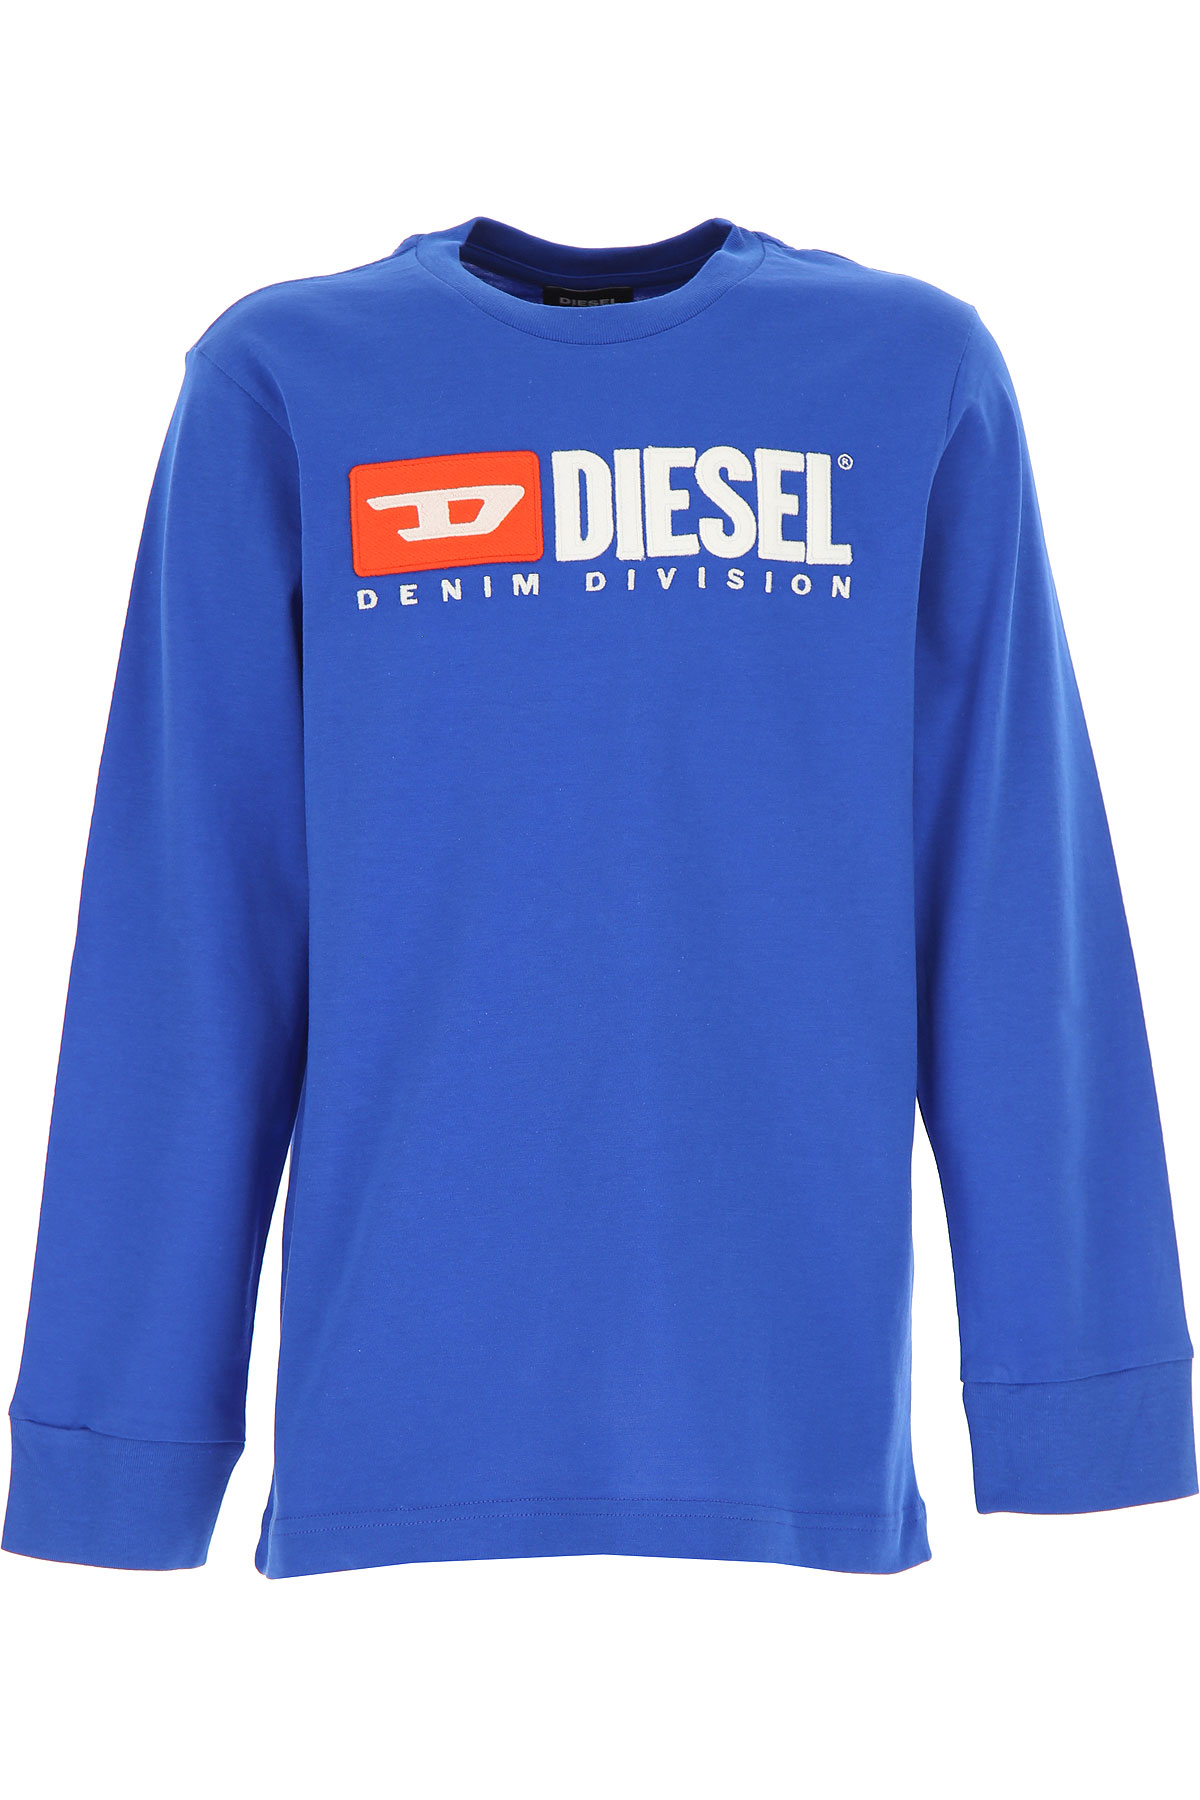 Diesel Kinder T-Shirt für Jungen Günstig im Sale, Königsblau, Baumwolle, 2017, 10Y 12Y 14Y 16Y 8Y